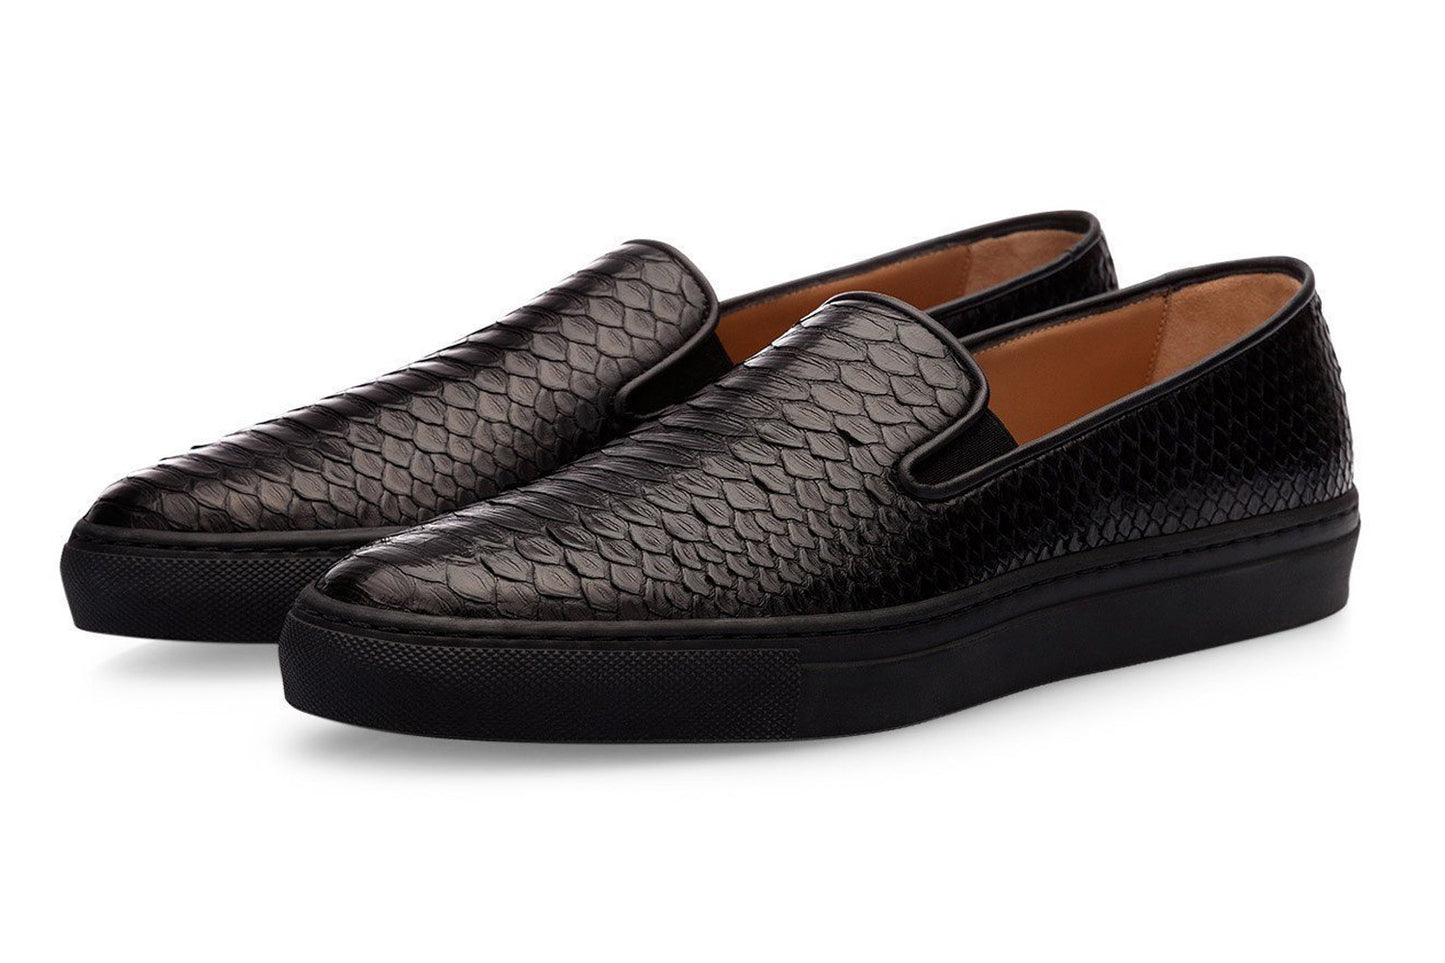 Black Snake Print Leather Slip-on Loafer Sneaker for Men. Black Comfortable Cup Sole.